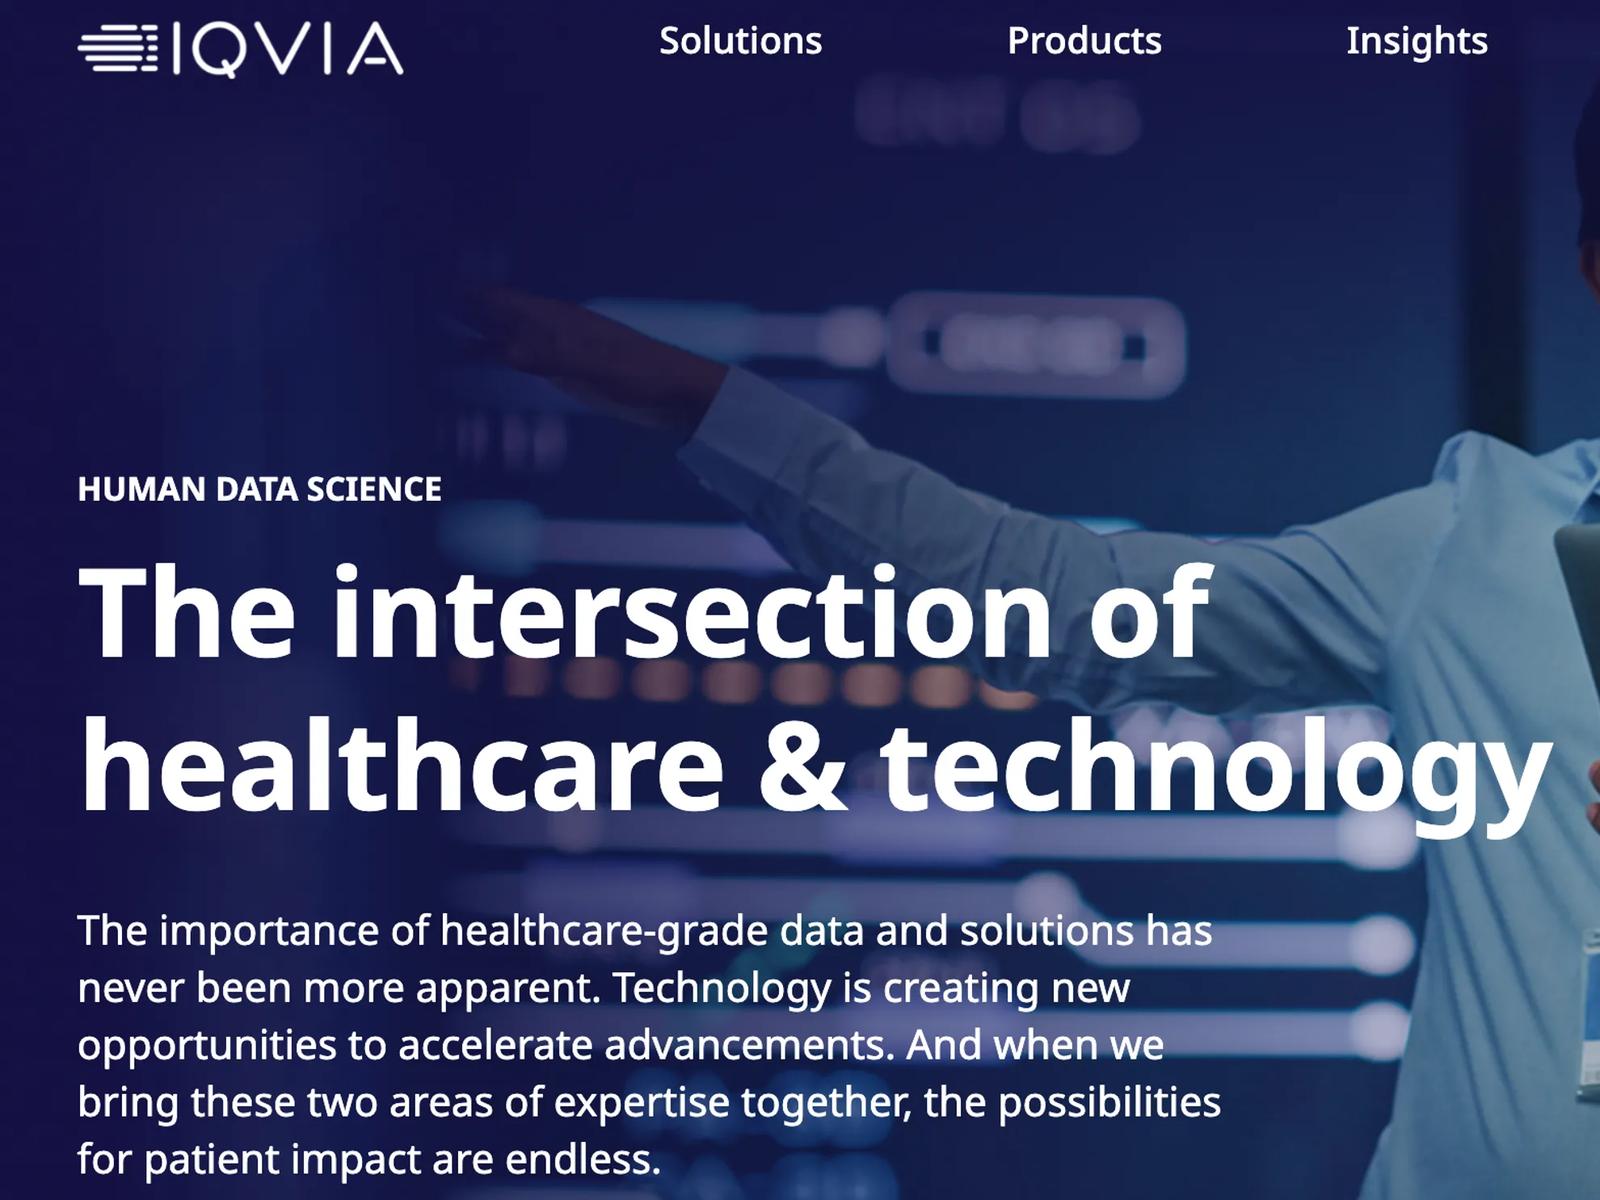 IQVIA - The Human Data Science Company